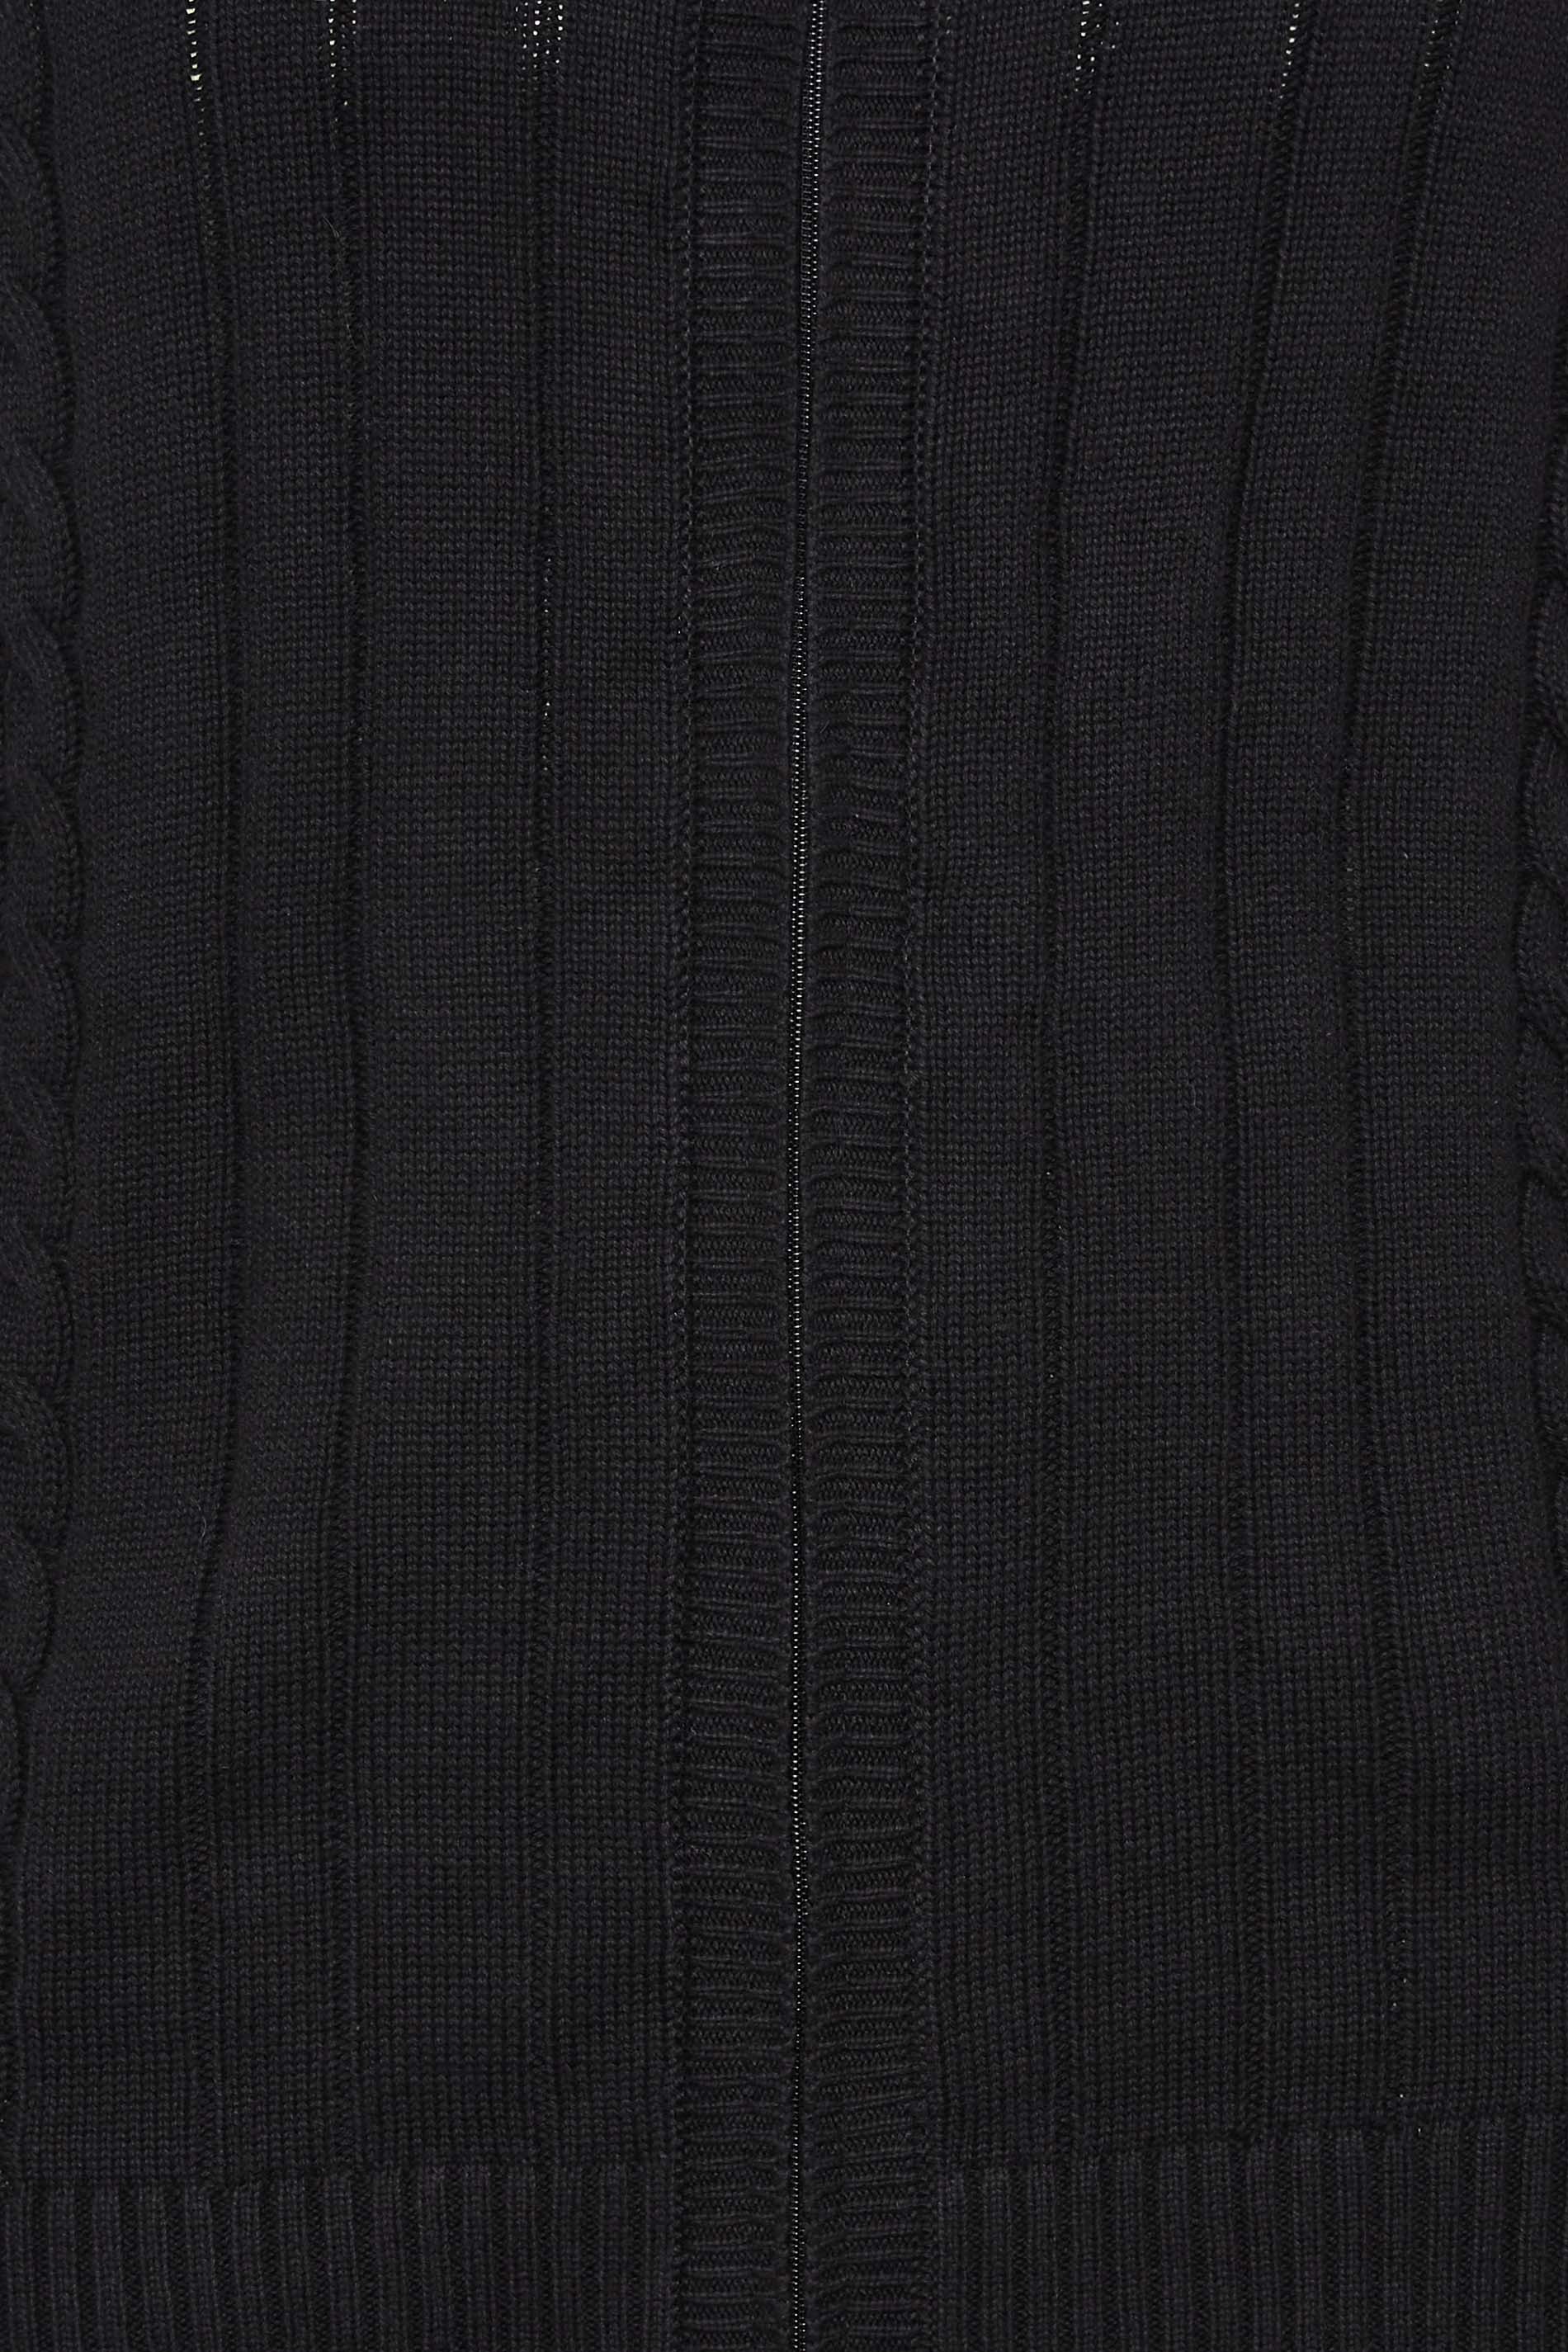 KAM Big & Tall Black Cable Knit Cardigan | BadRhino 2